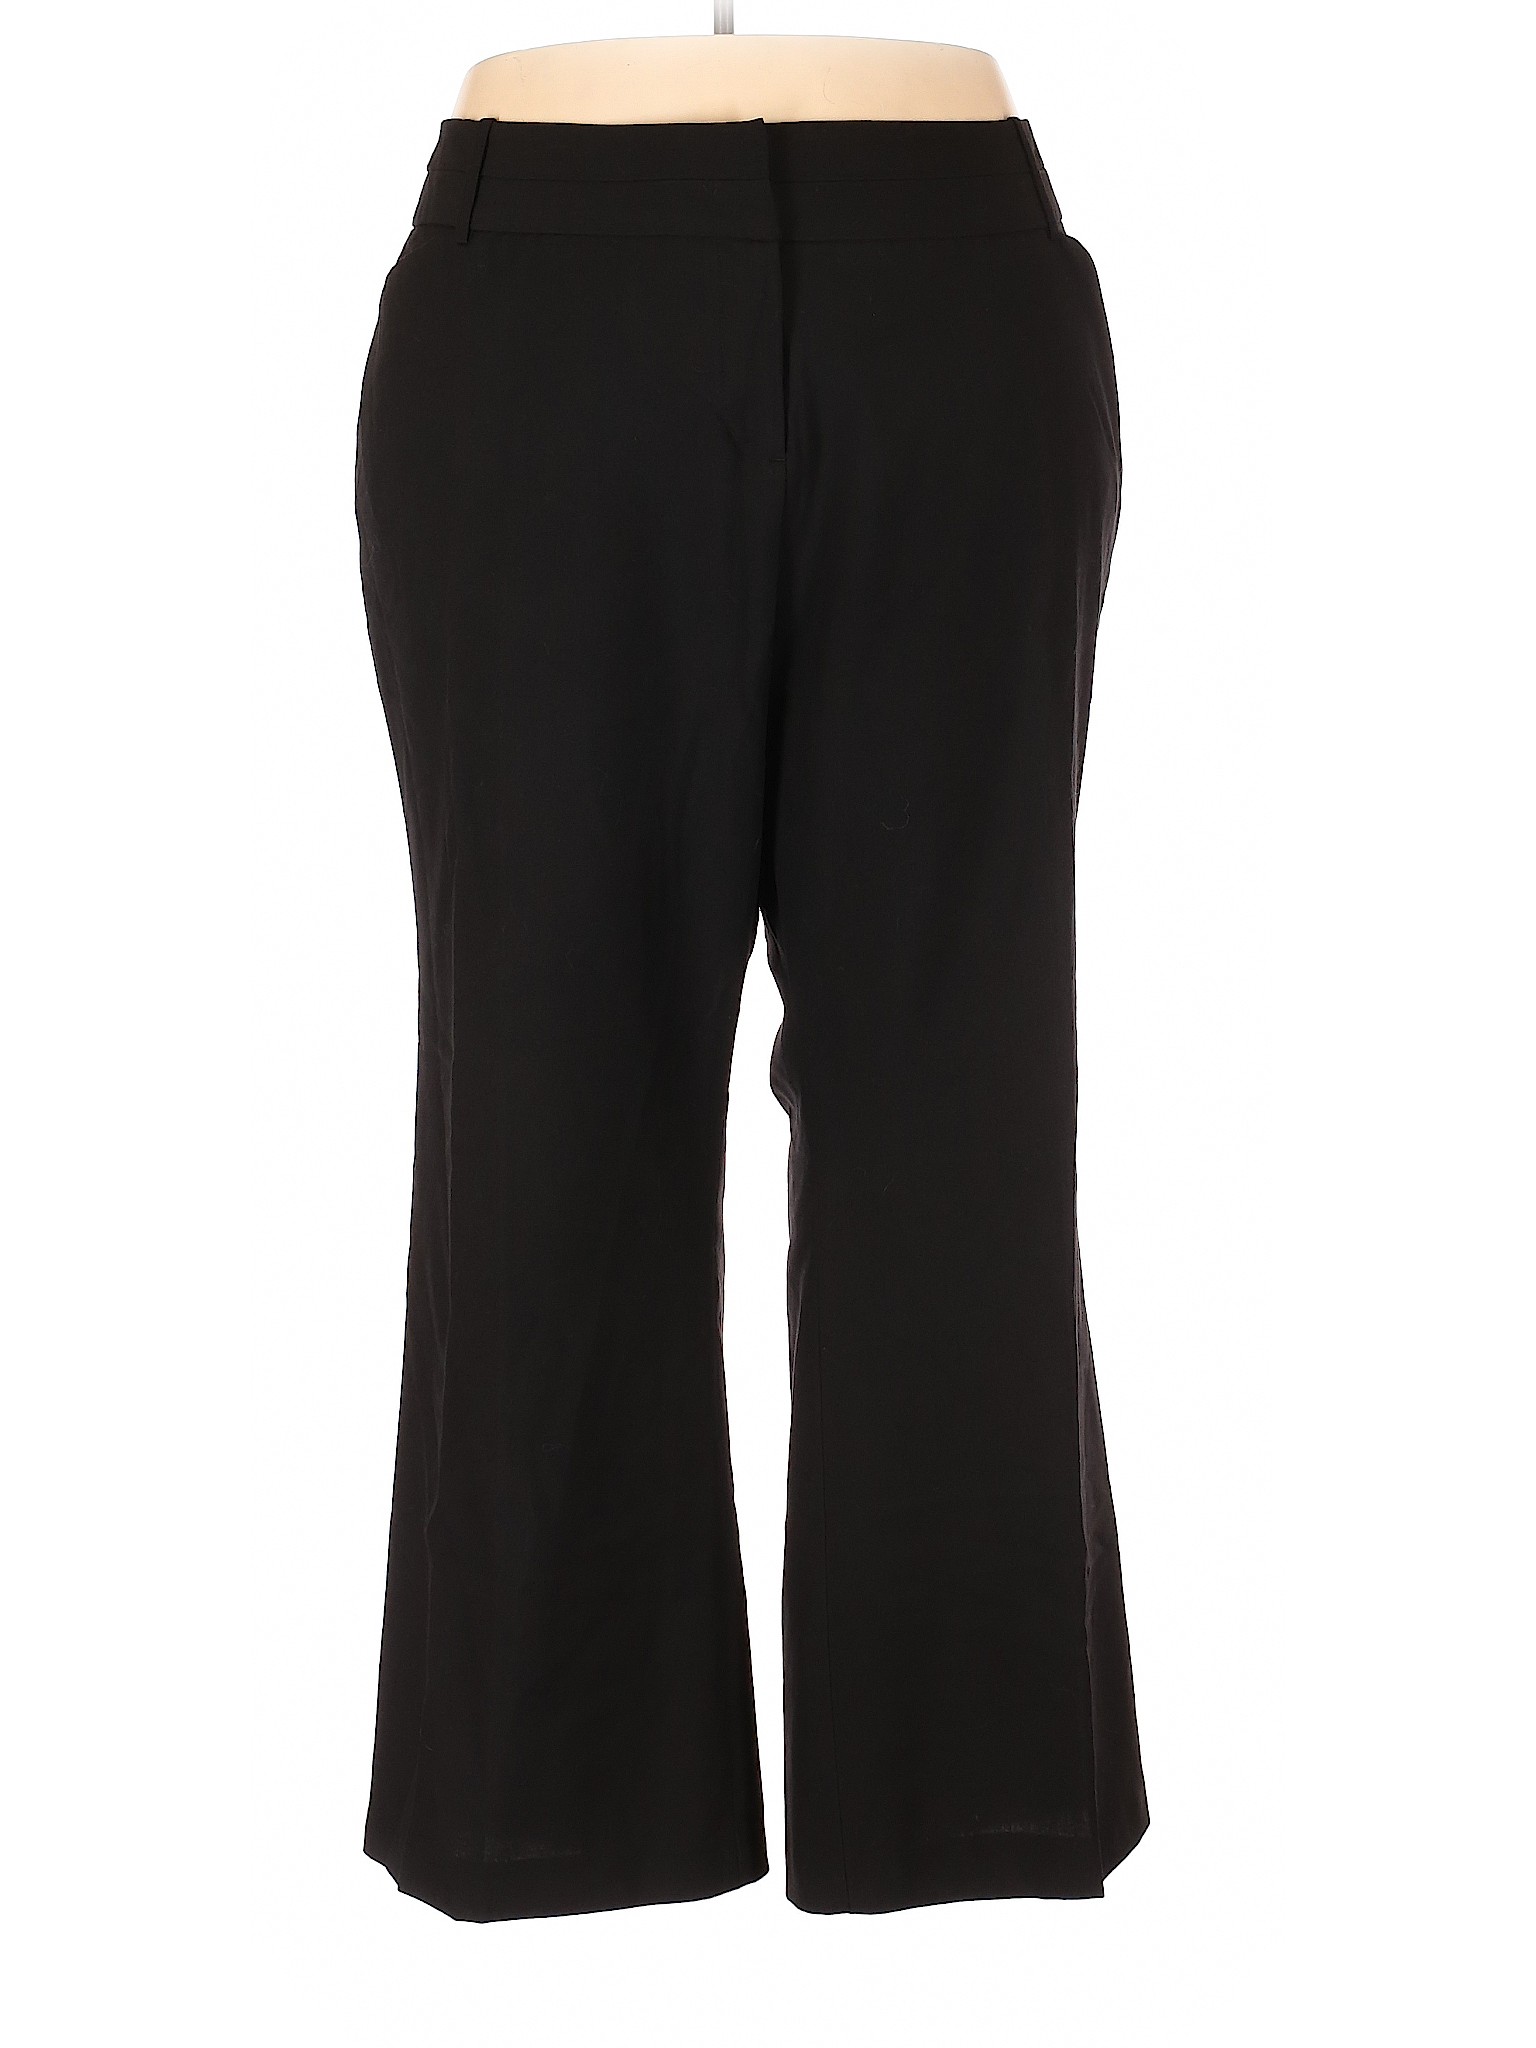 Cato Solid Black Dress Pants Size 24 (Plus) - 56% off | thredUP